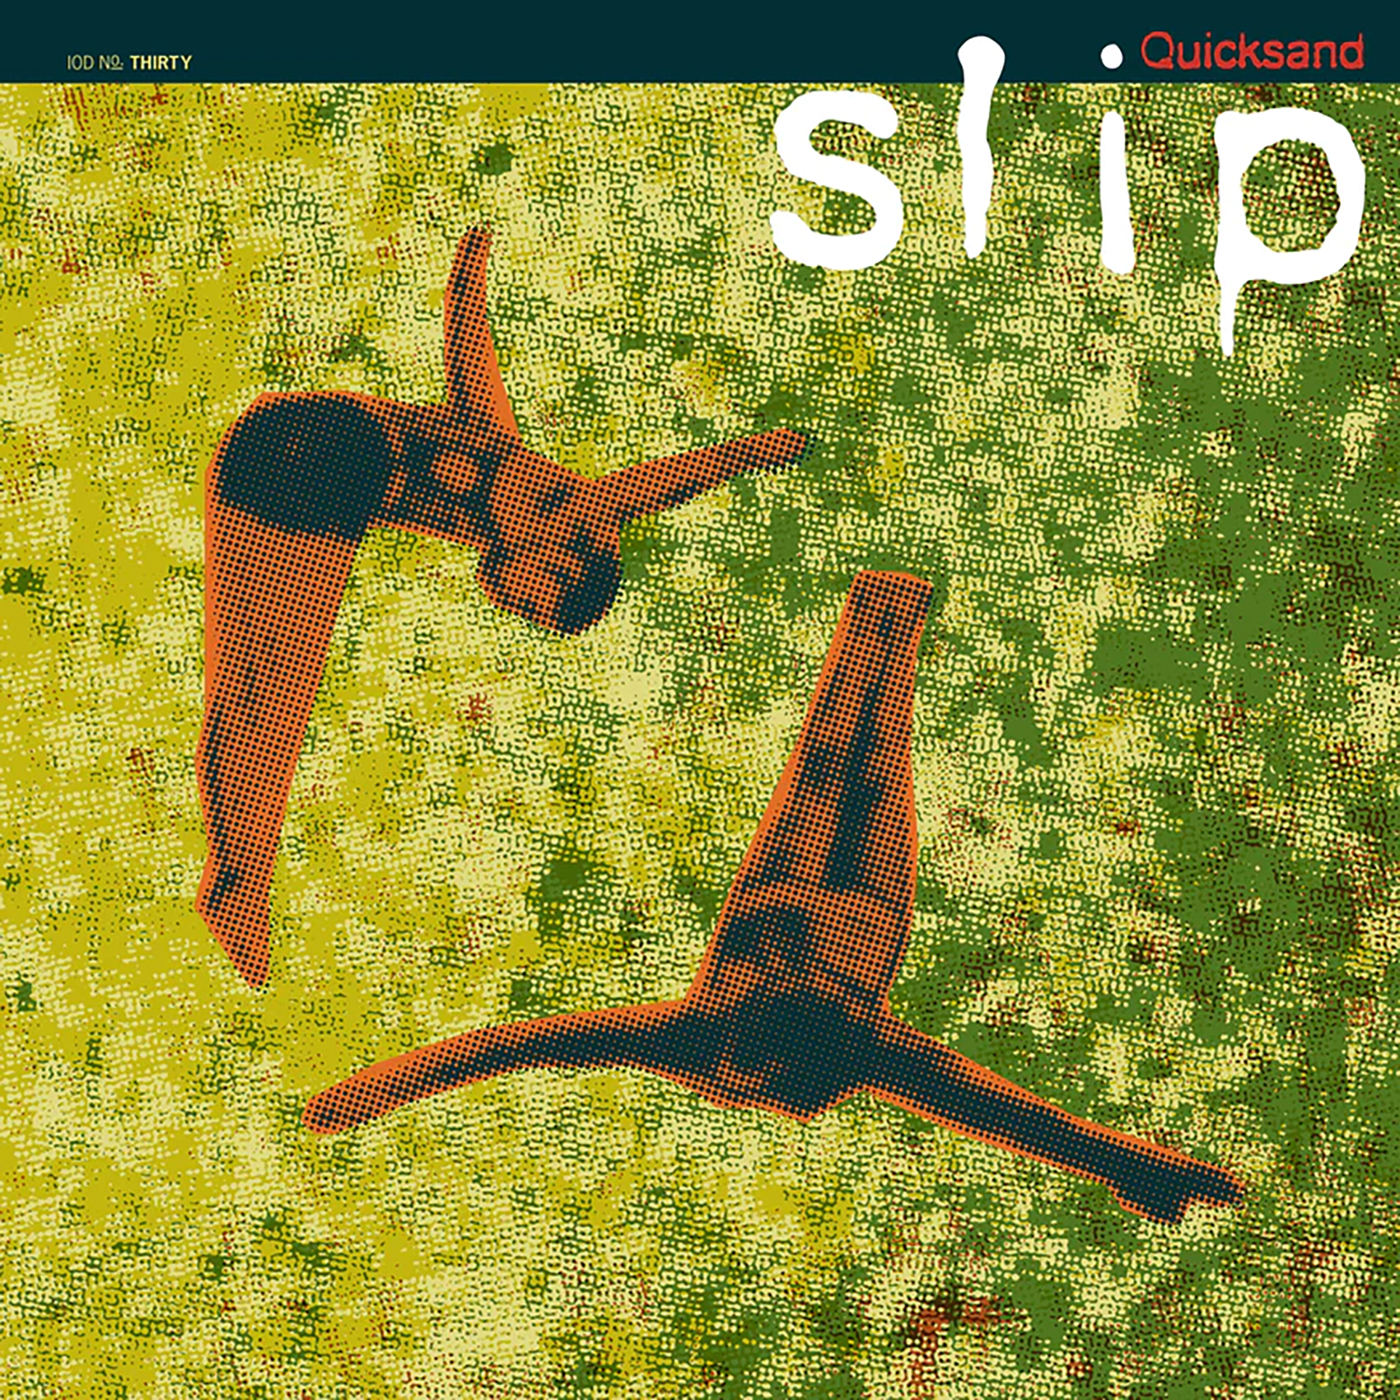 Quicksand - Slip (Deluxe Book)